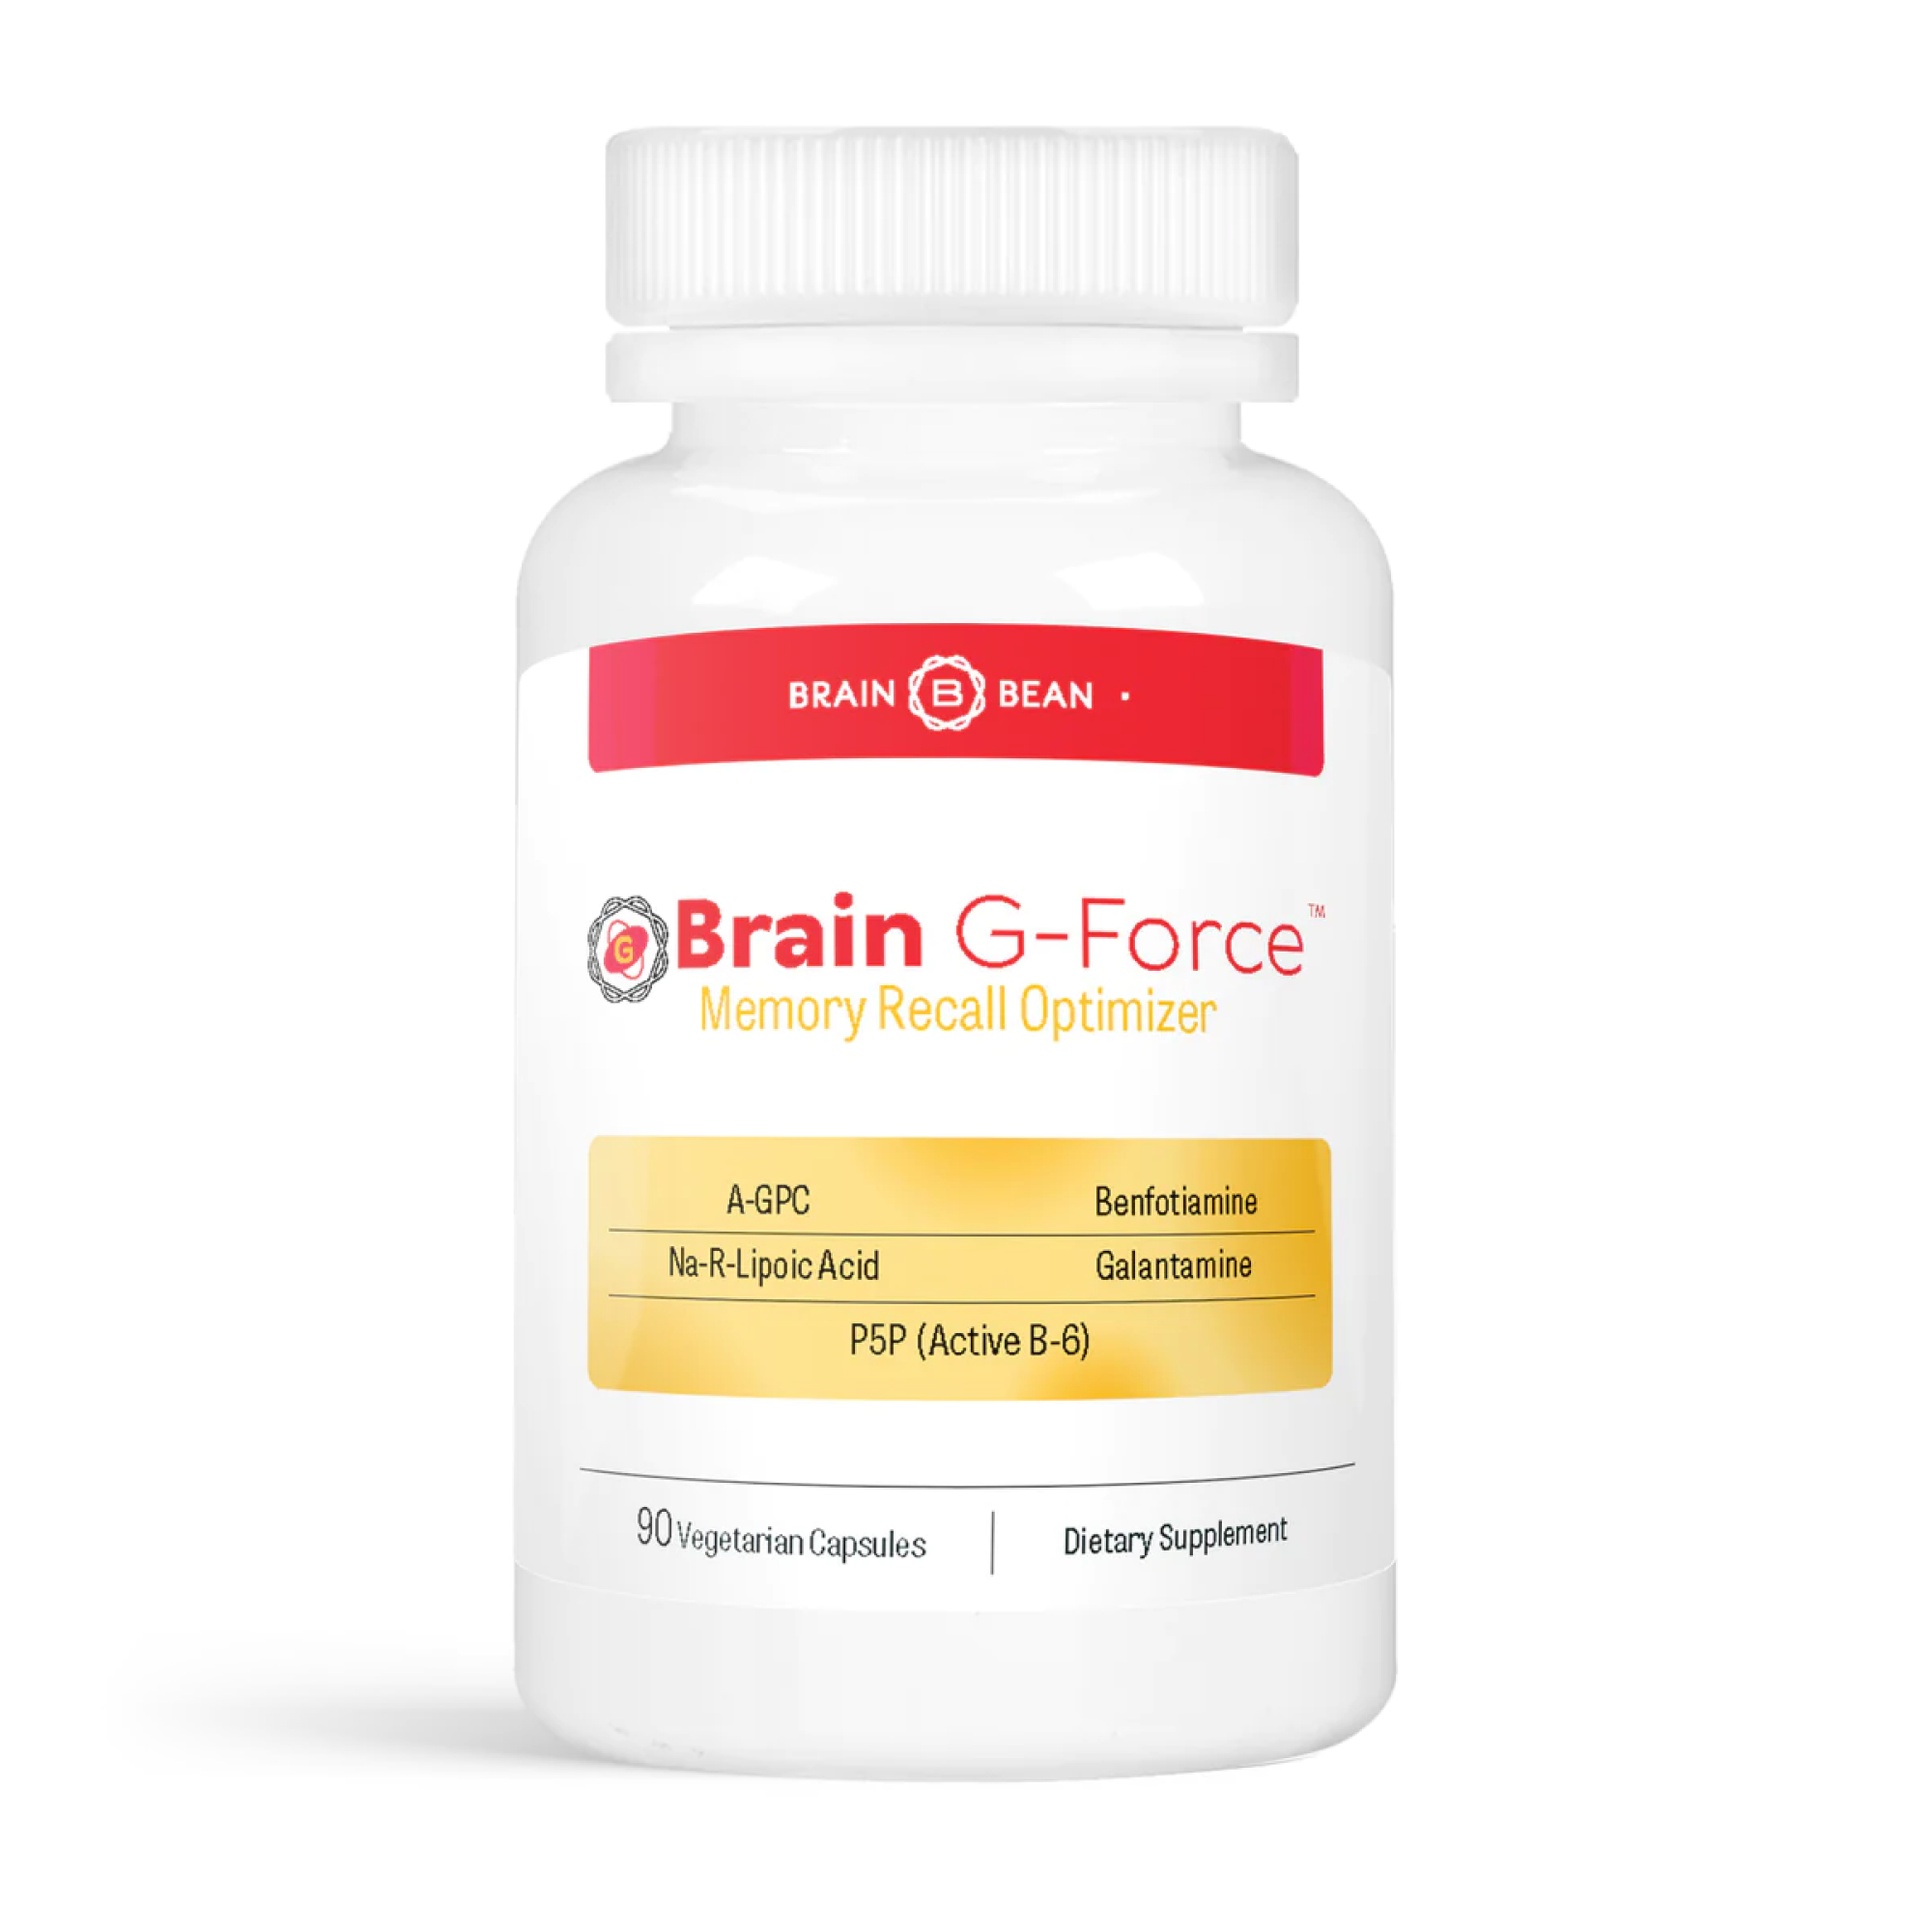 Brain G-Force